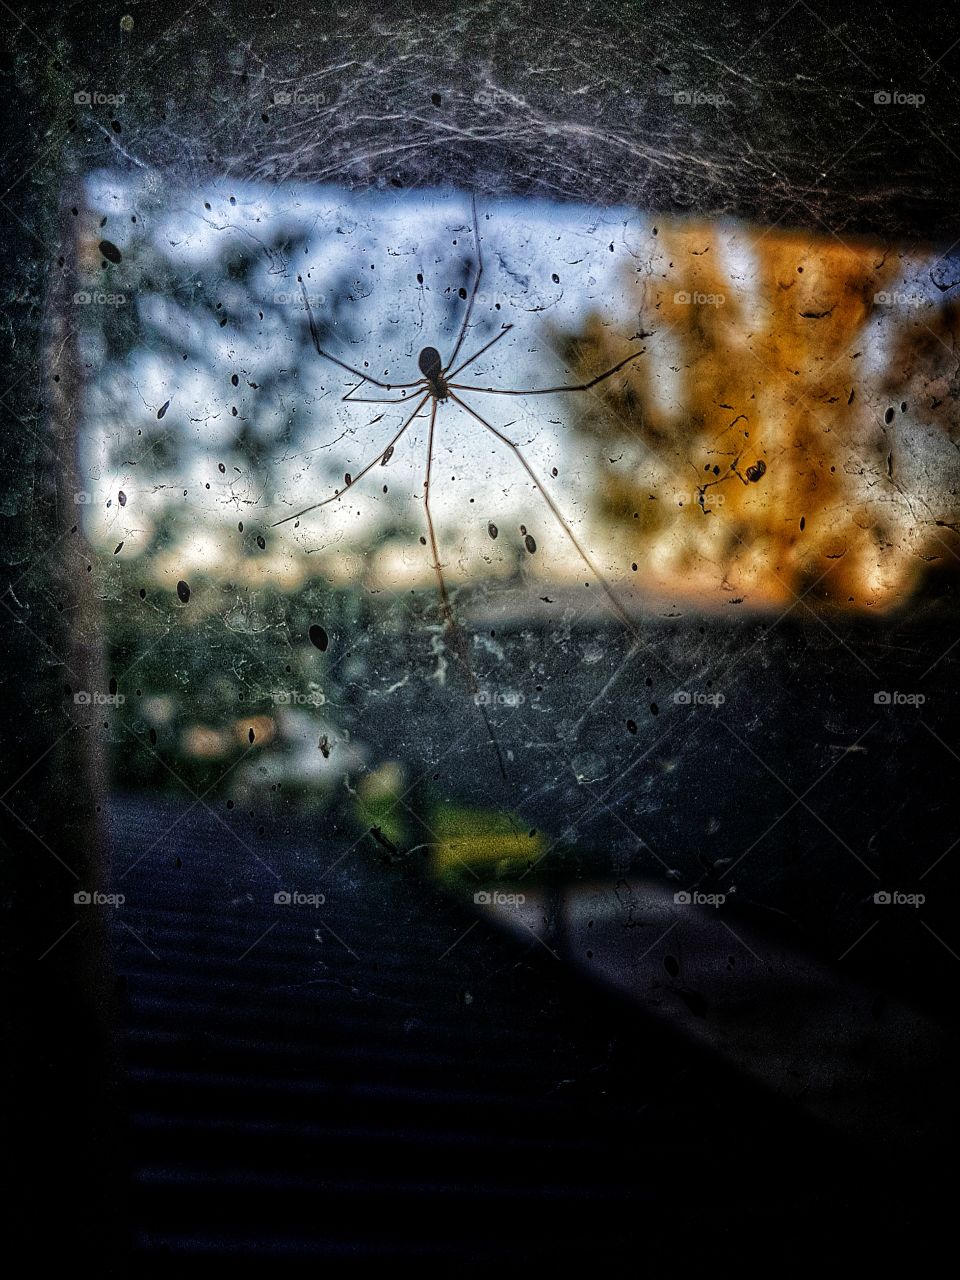 Spider on the window